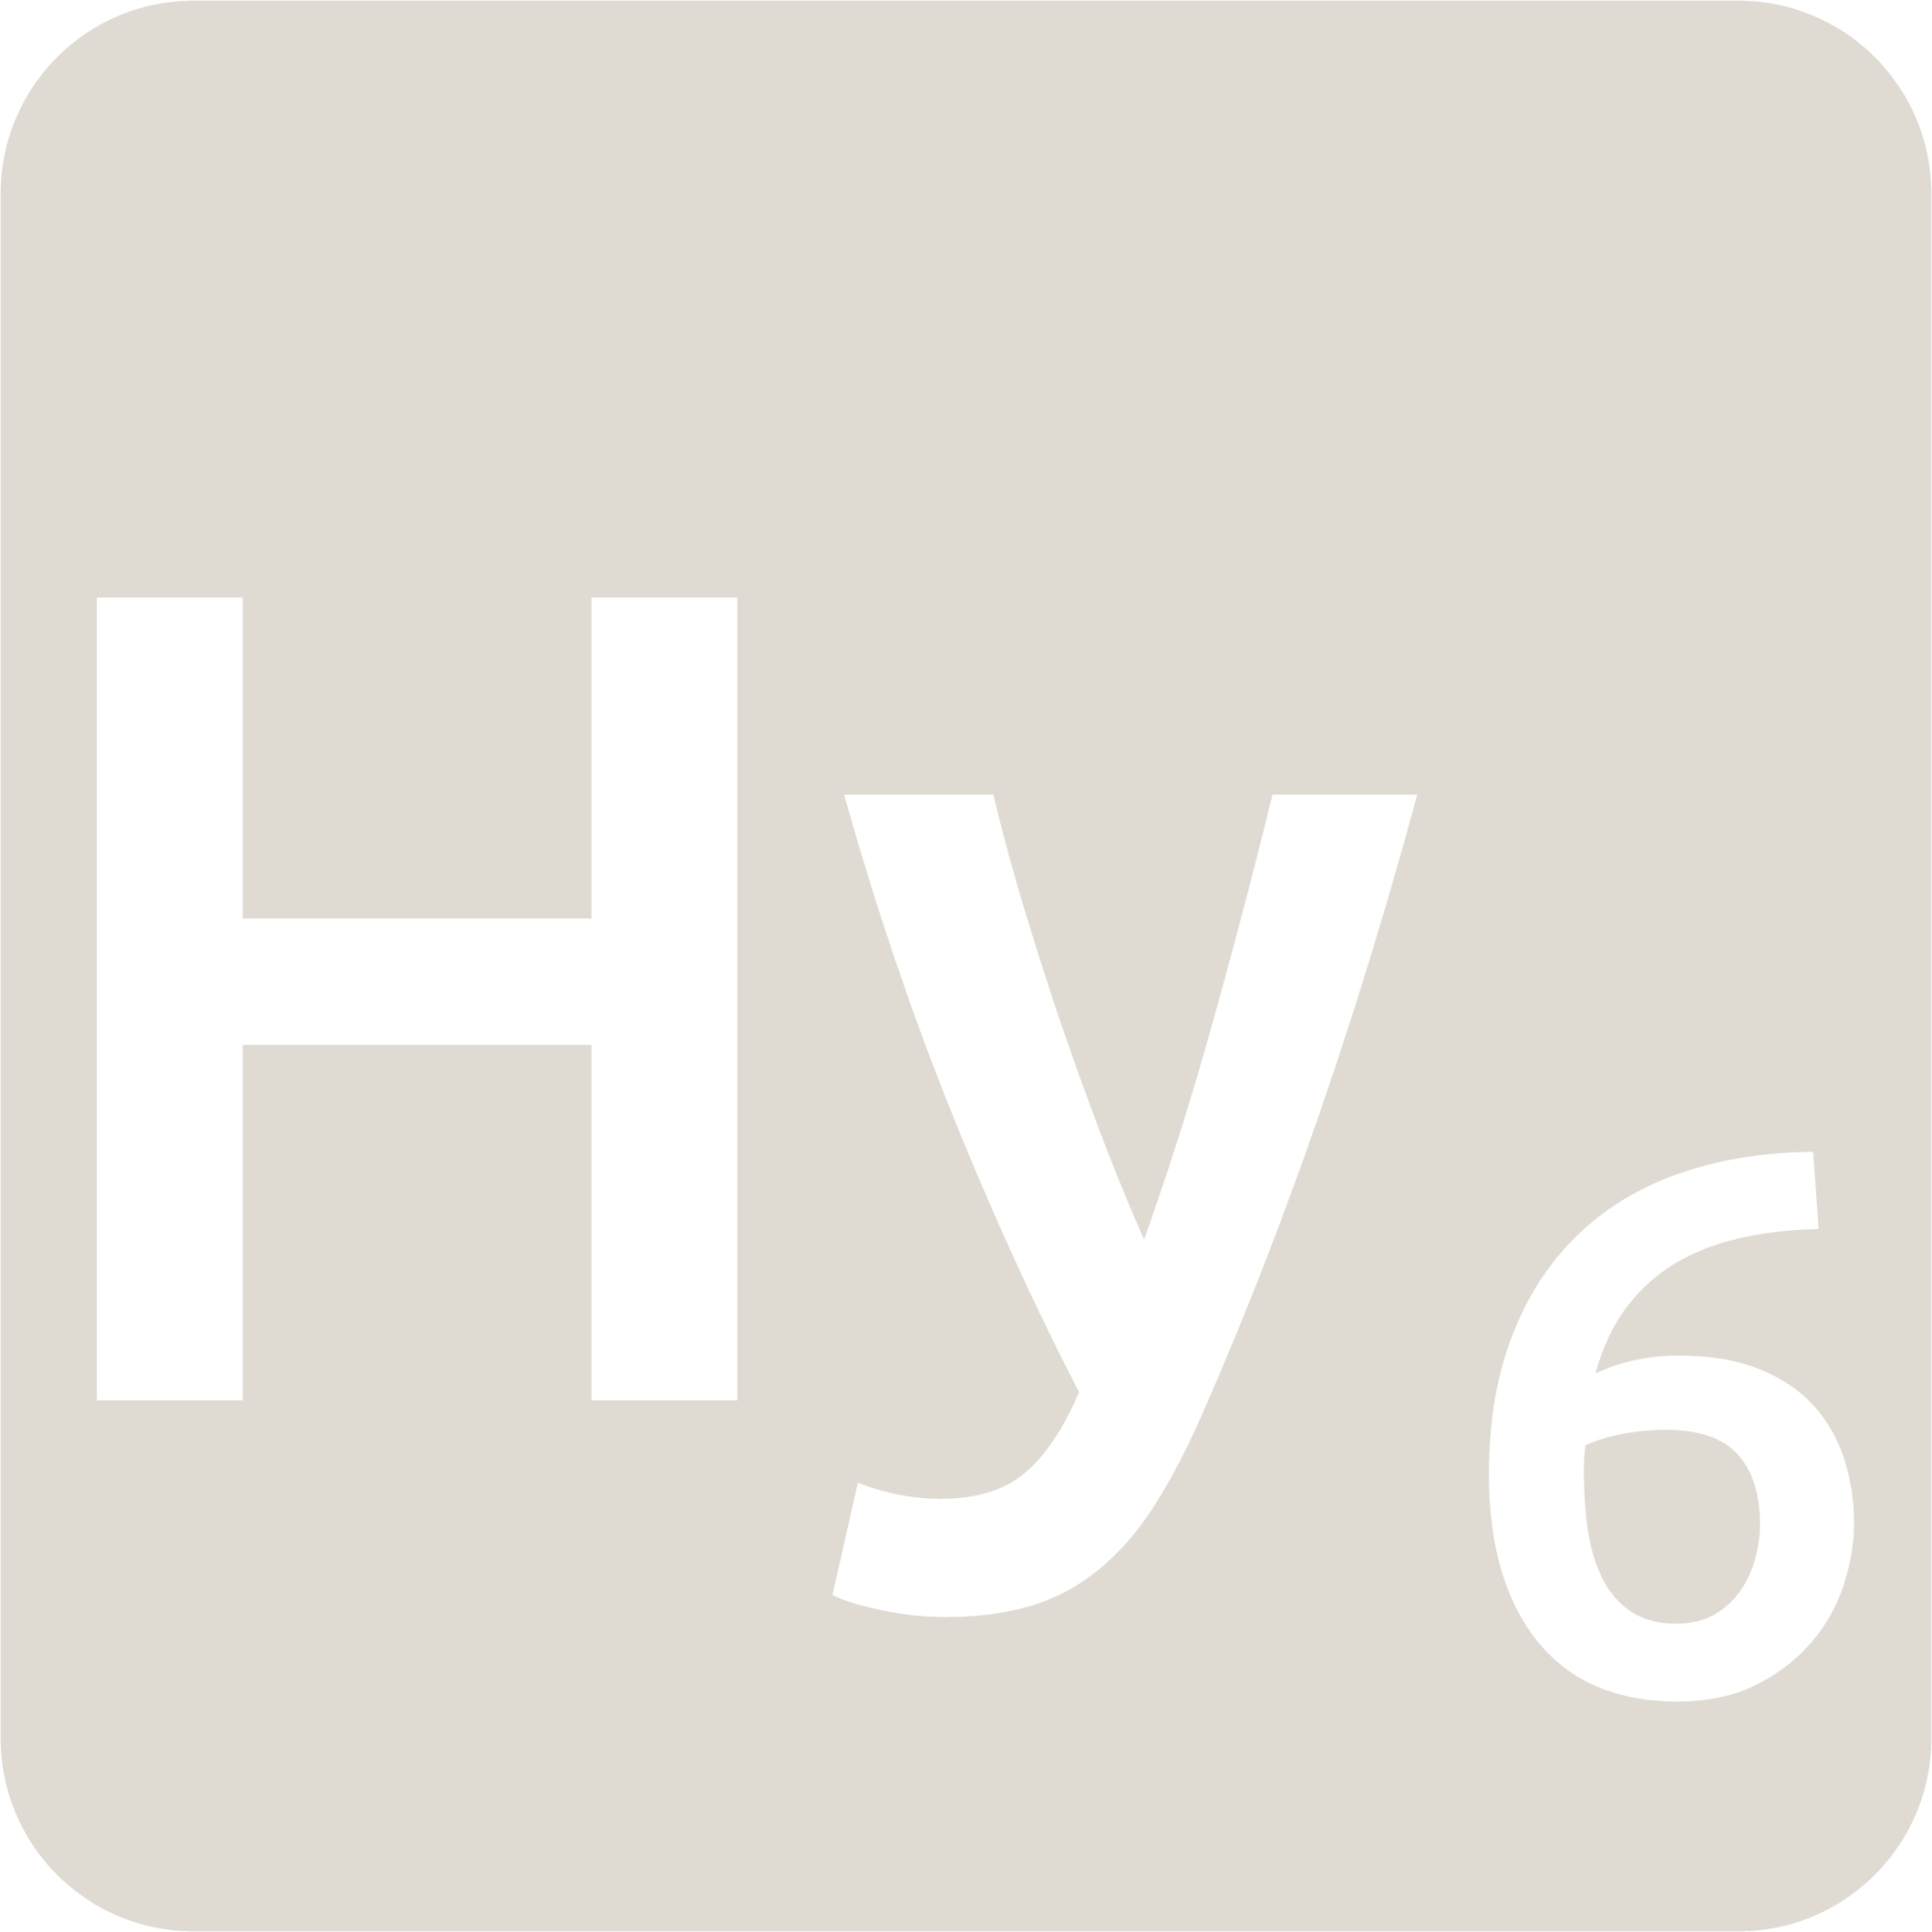 indicator keyboard Hy 6 icon